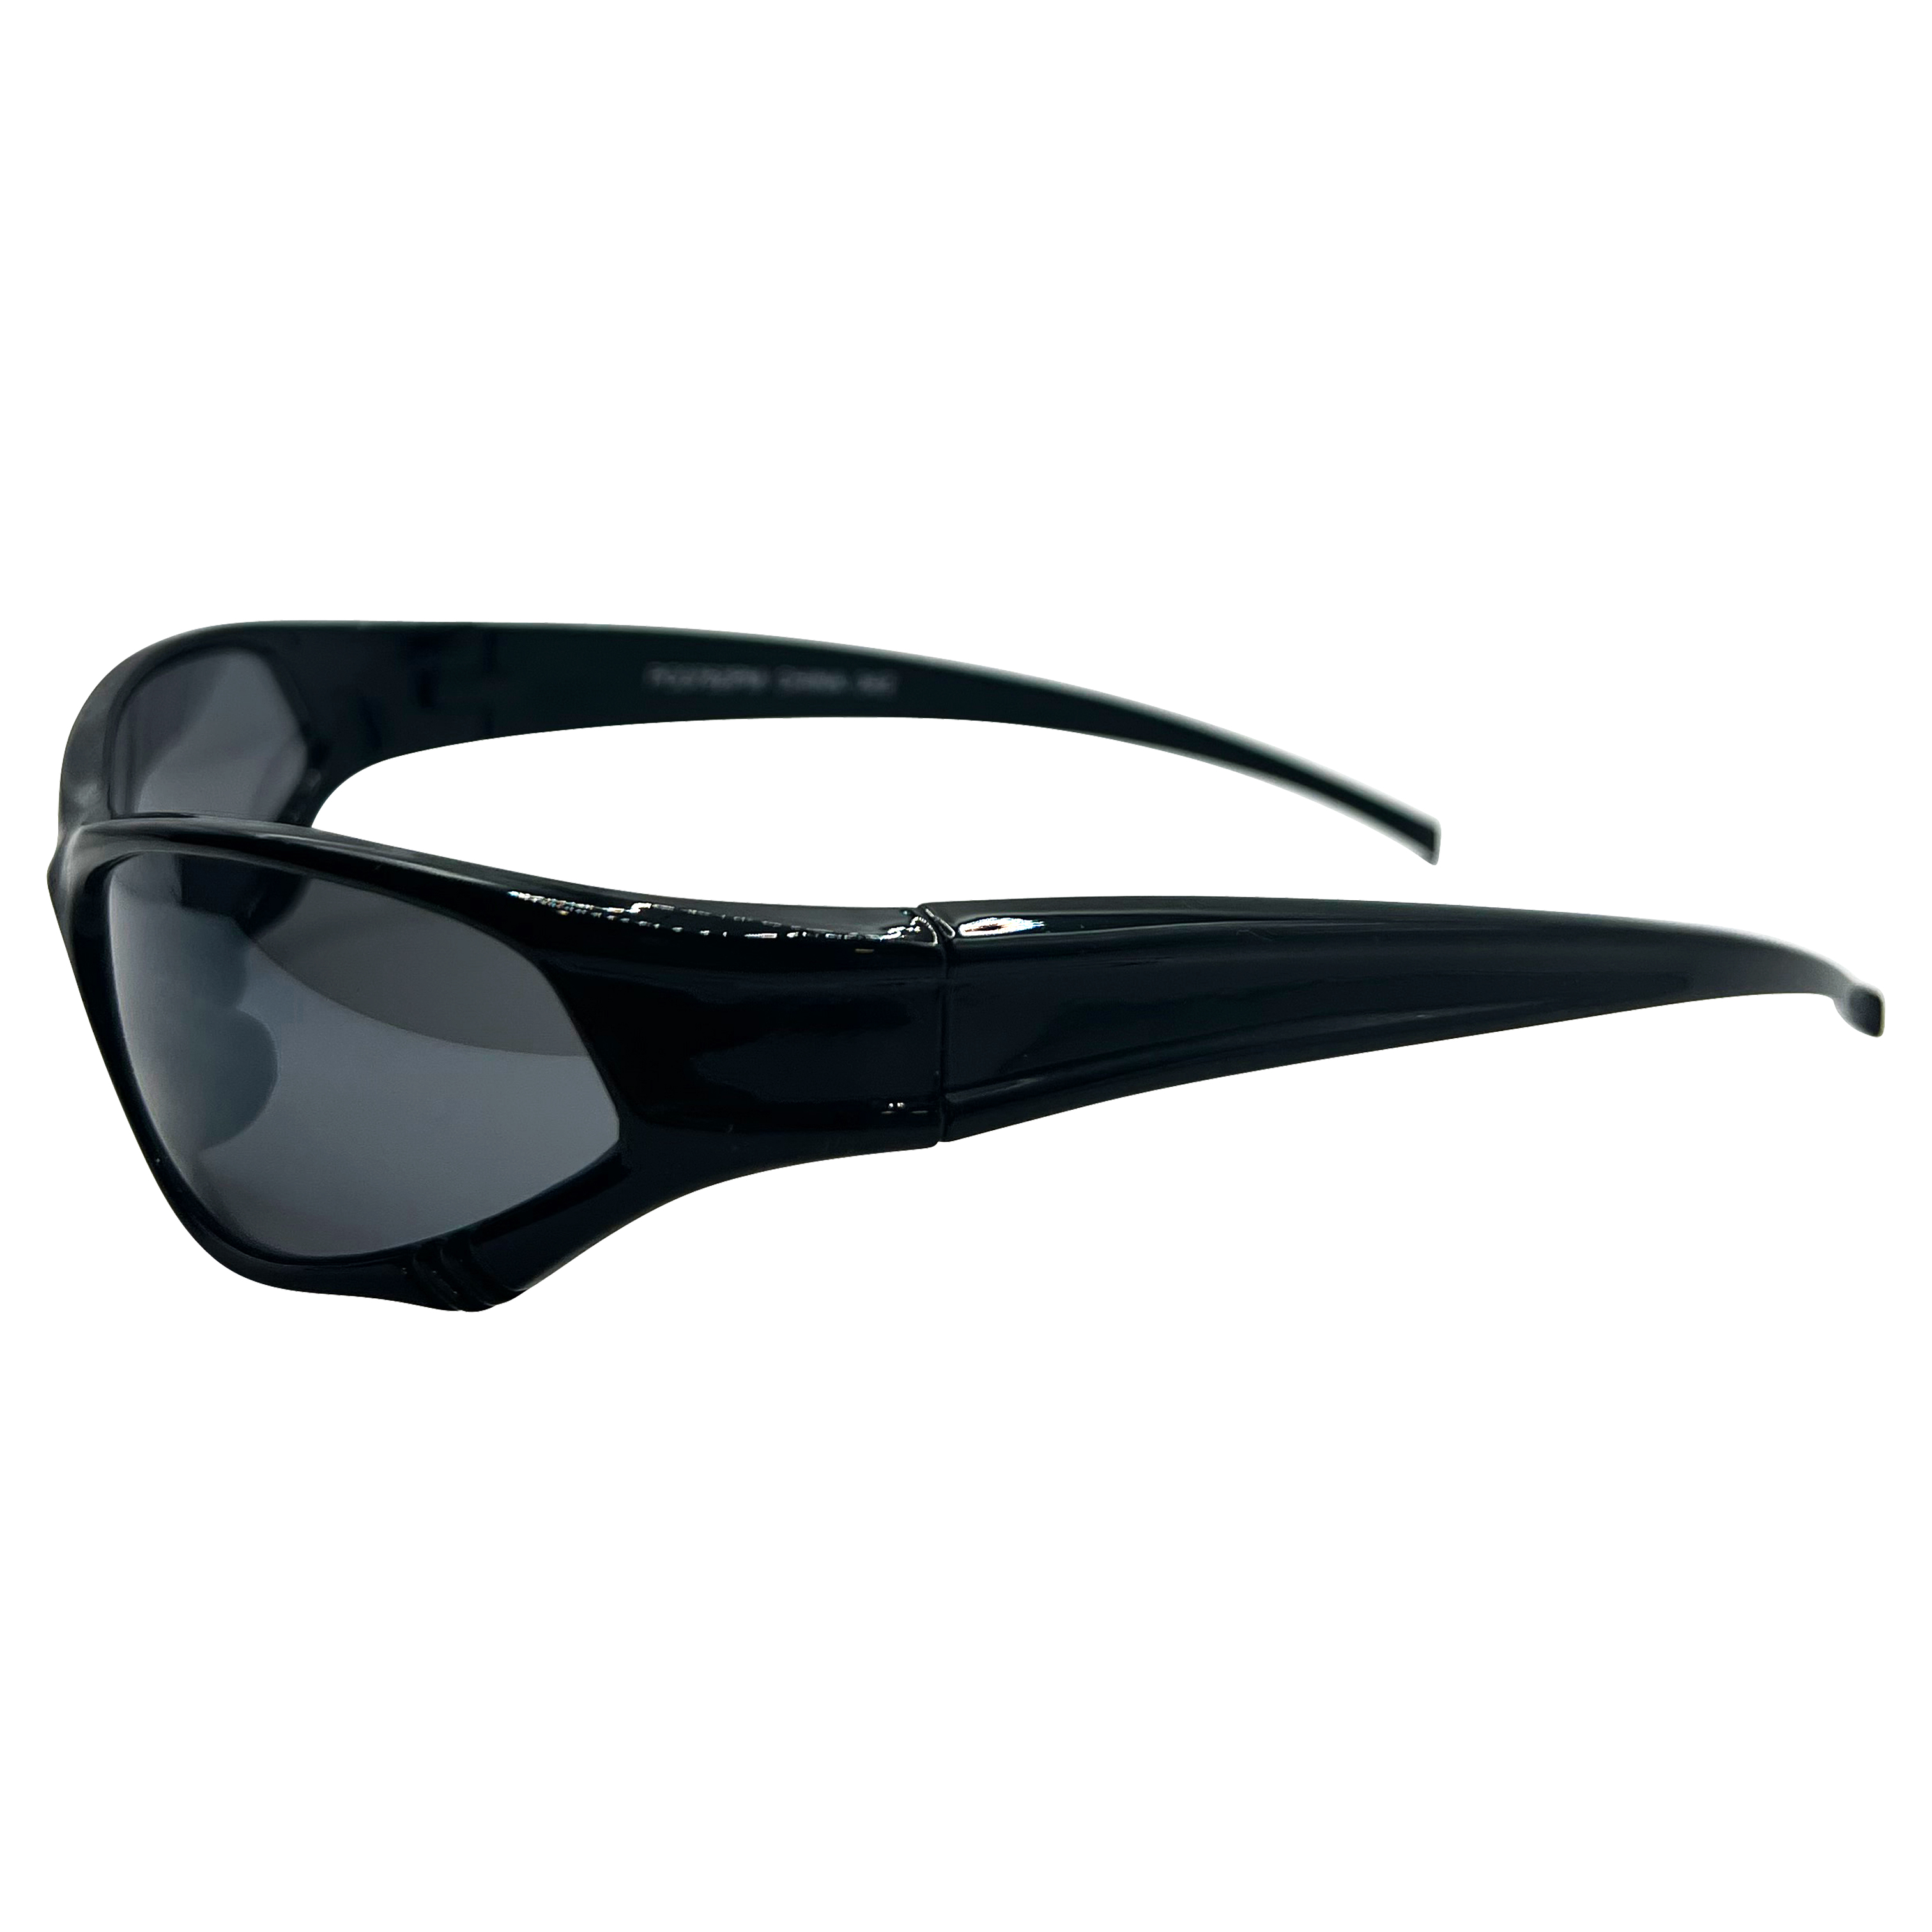 TWERK Super Dark/Black Fashion Sports Sunglasses *As Seen On: Delilah Belle*